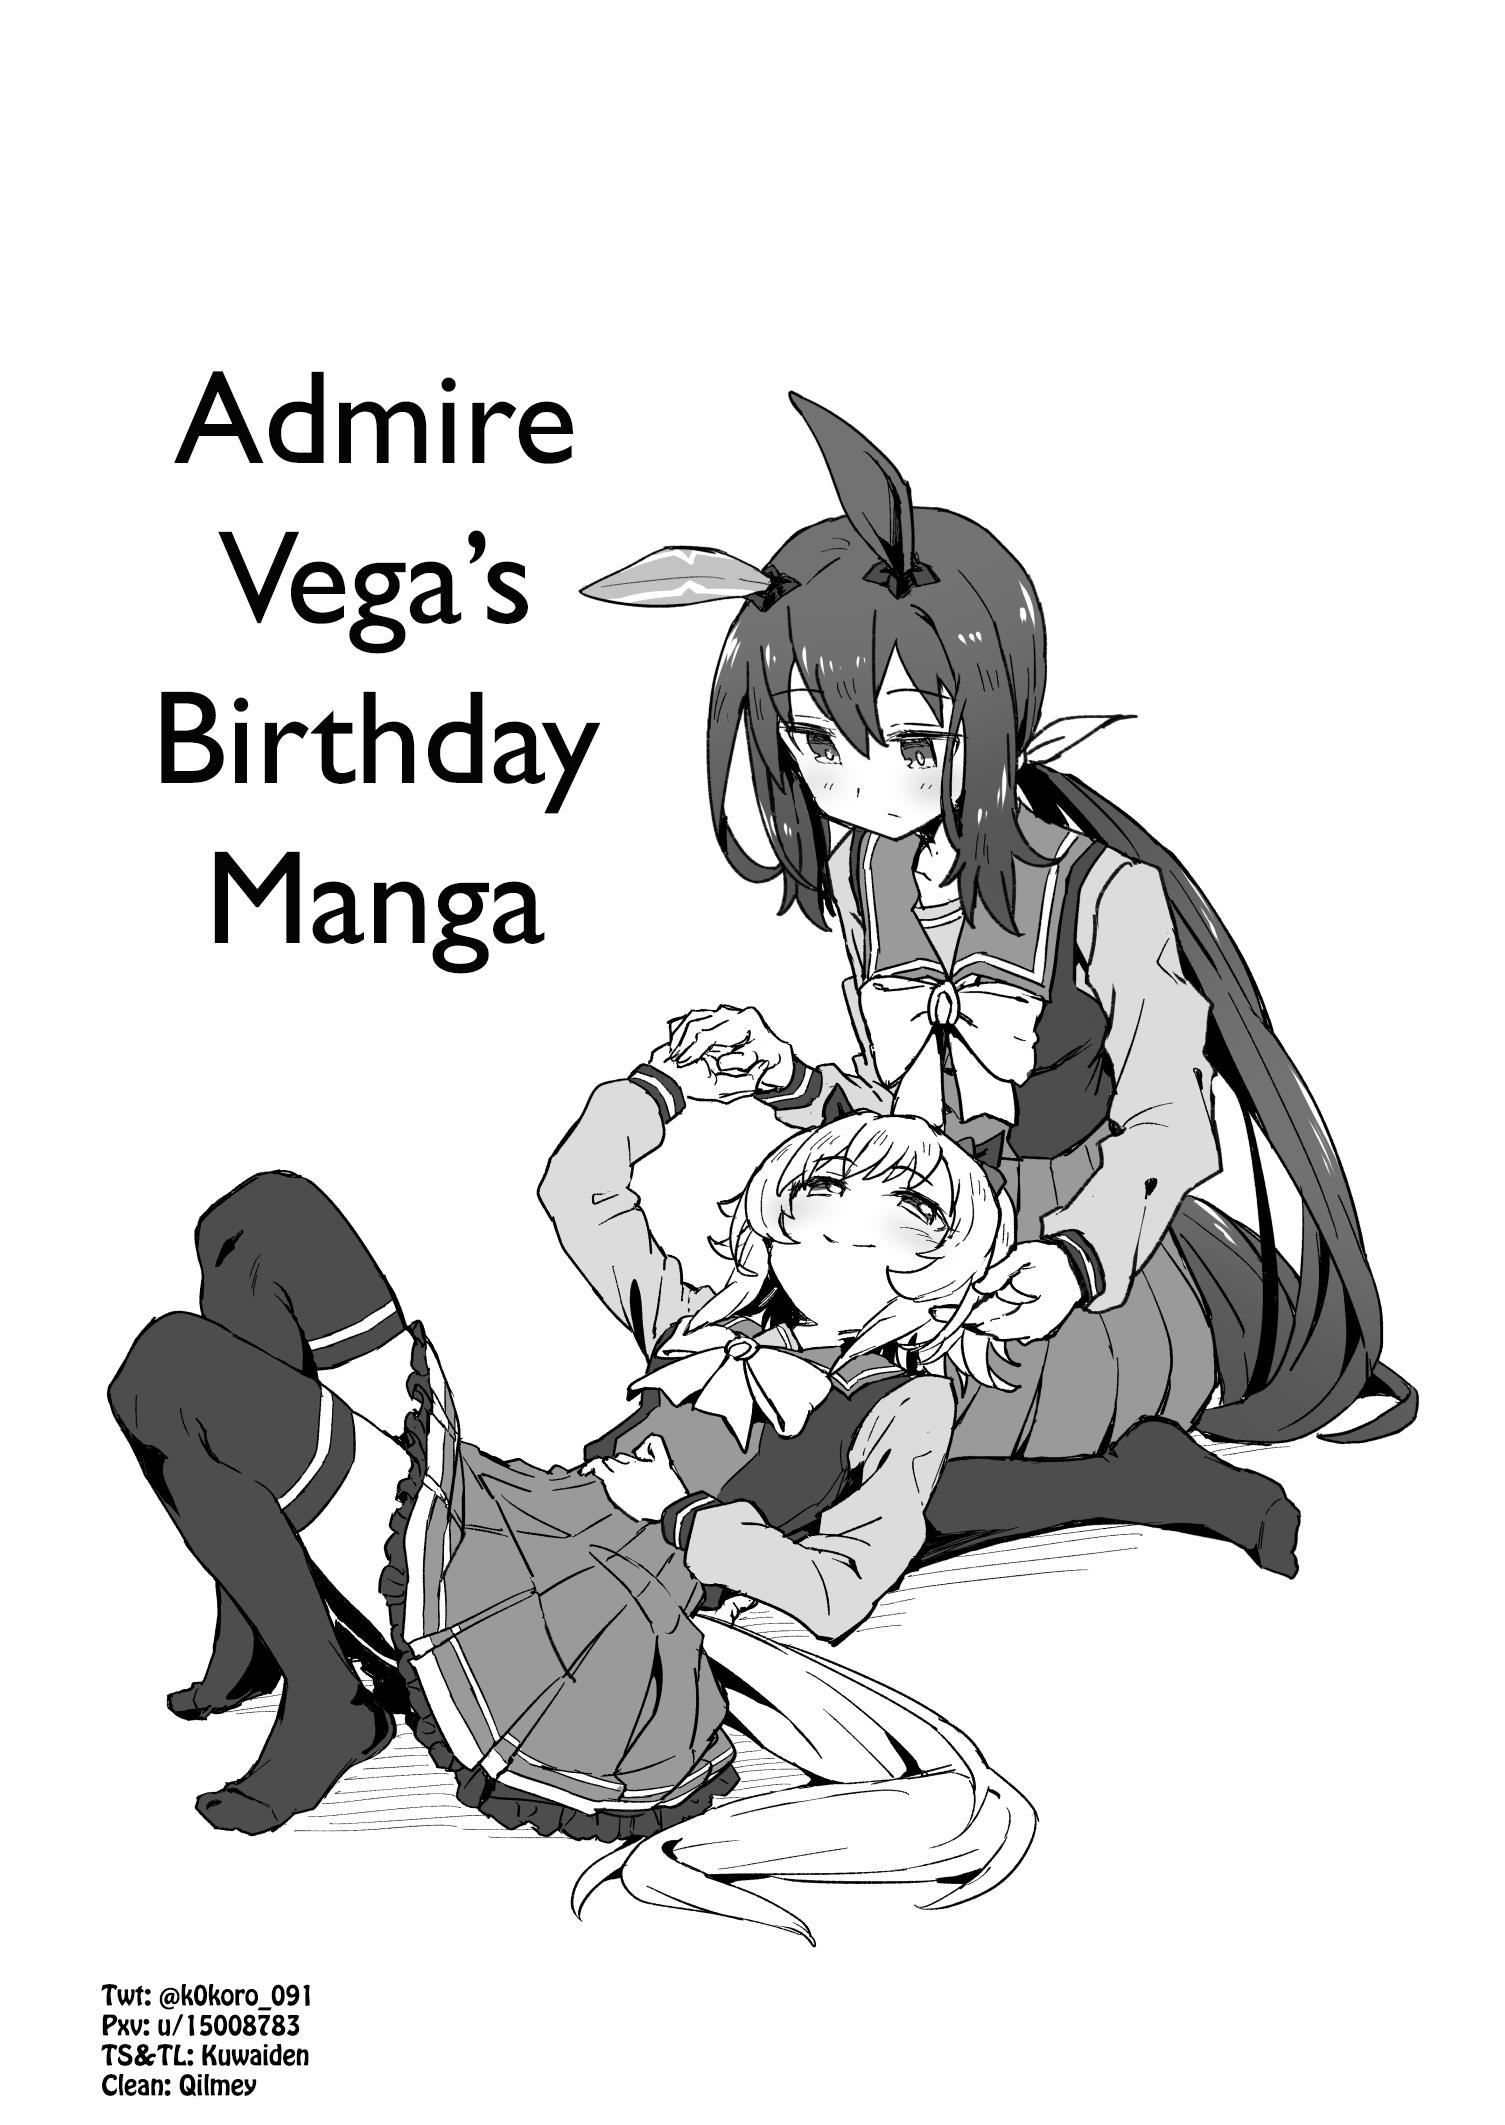 Kokoro-Sensei's Umamusume Shorts (Doujinshi) Chapter 10: Admire Vega Birthday Manga - Picture 1